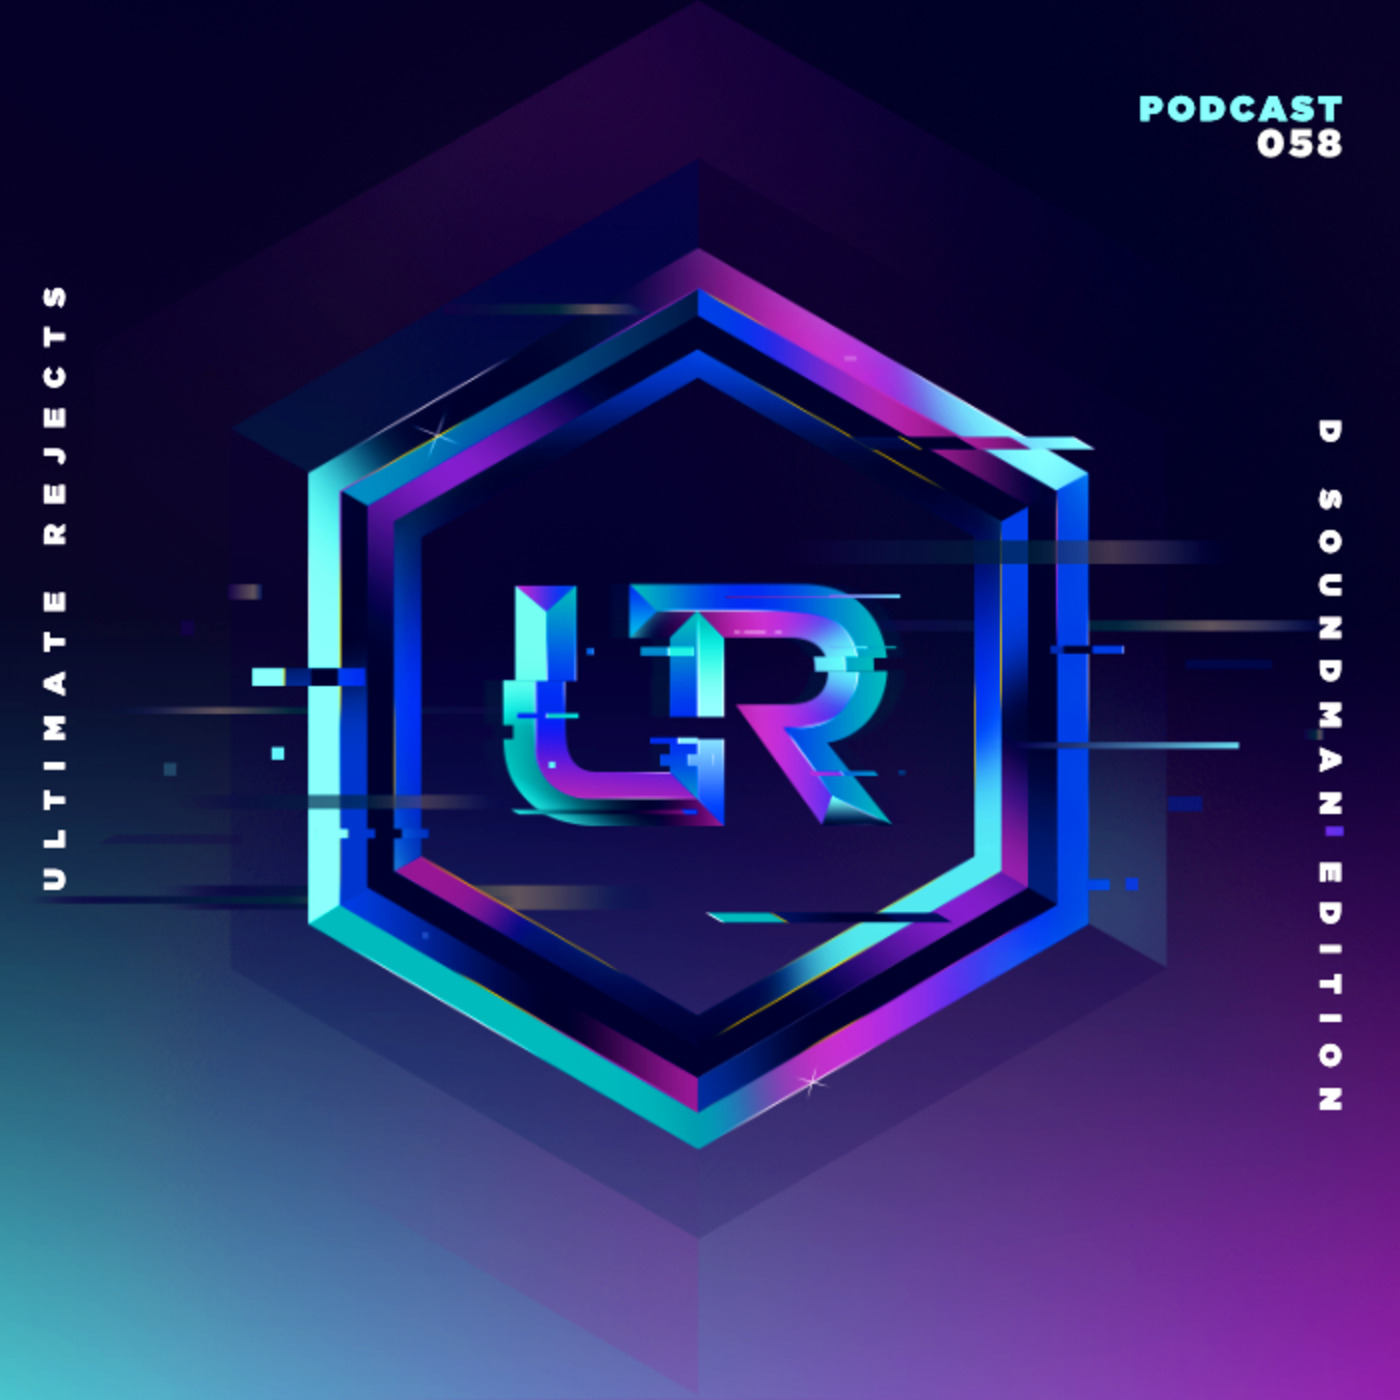 Ultimate Rejects UR Podcast 058 (D Soundman Edition)